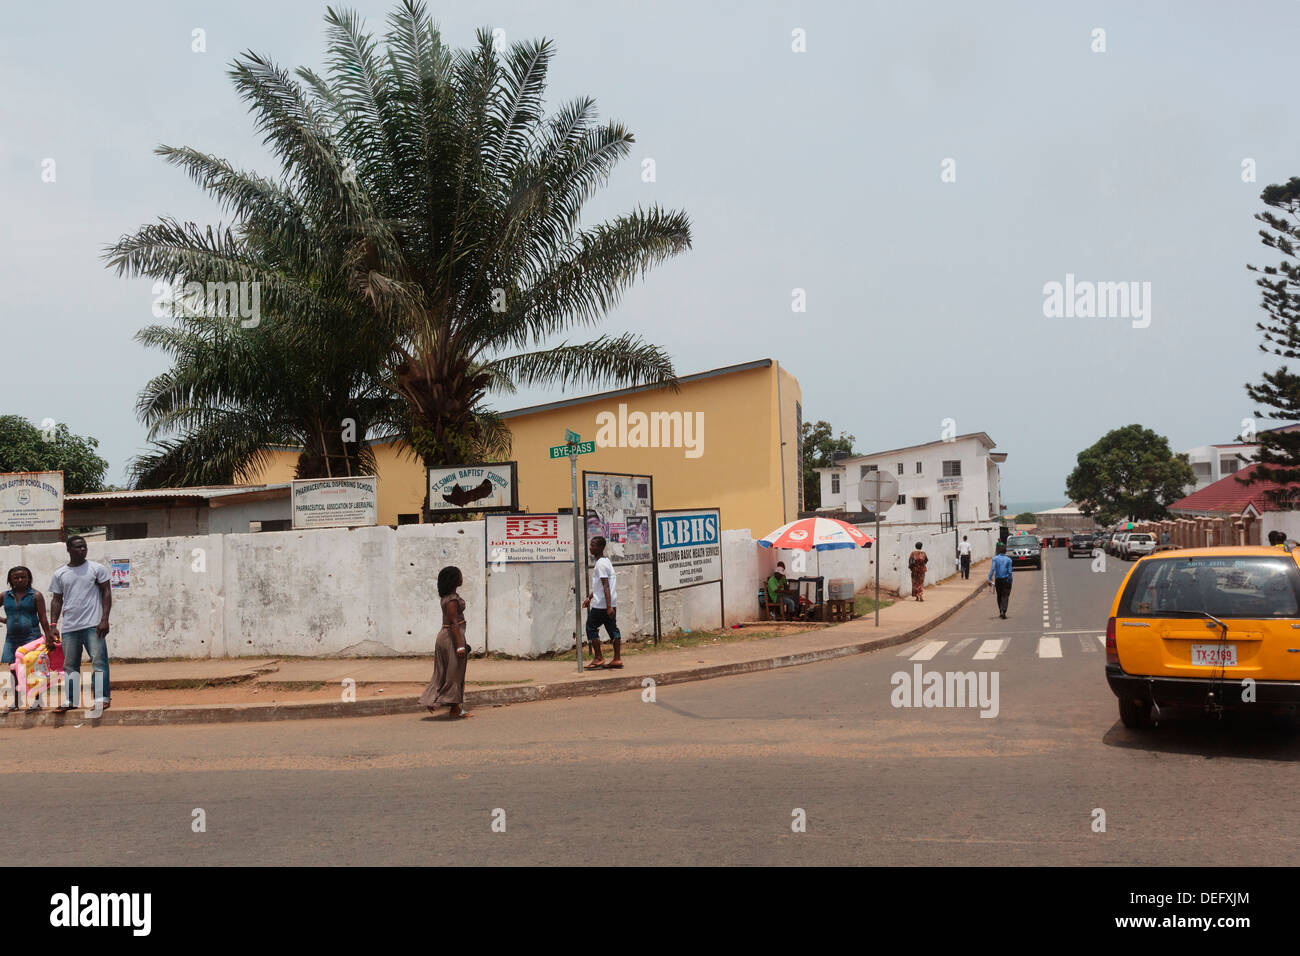 Africa, Liberia, Monrovia. People walking down street. Stock Photo